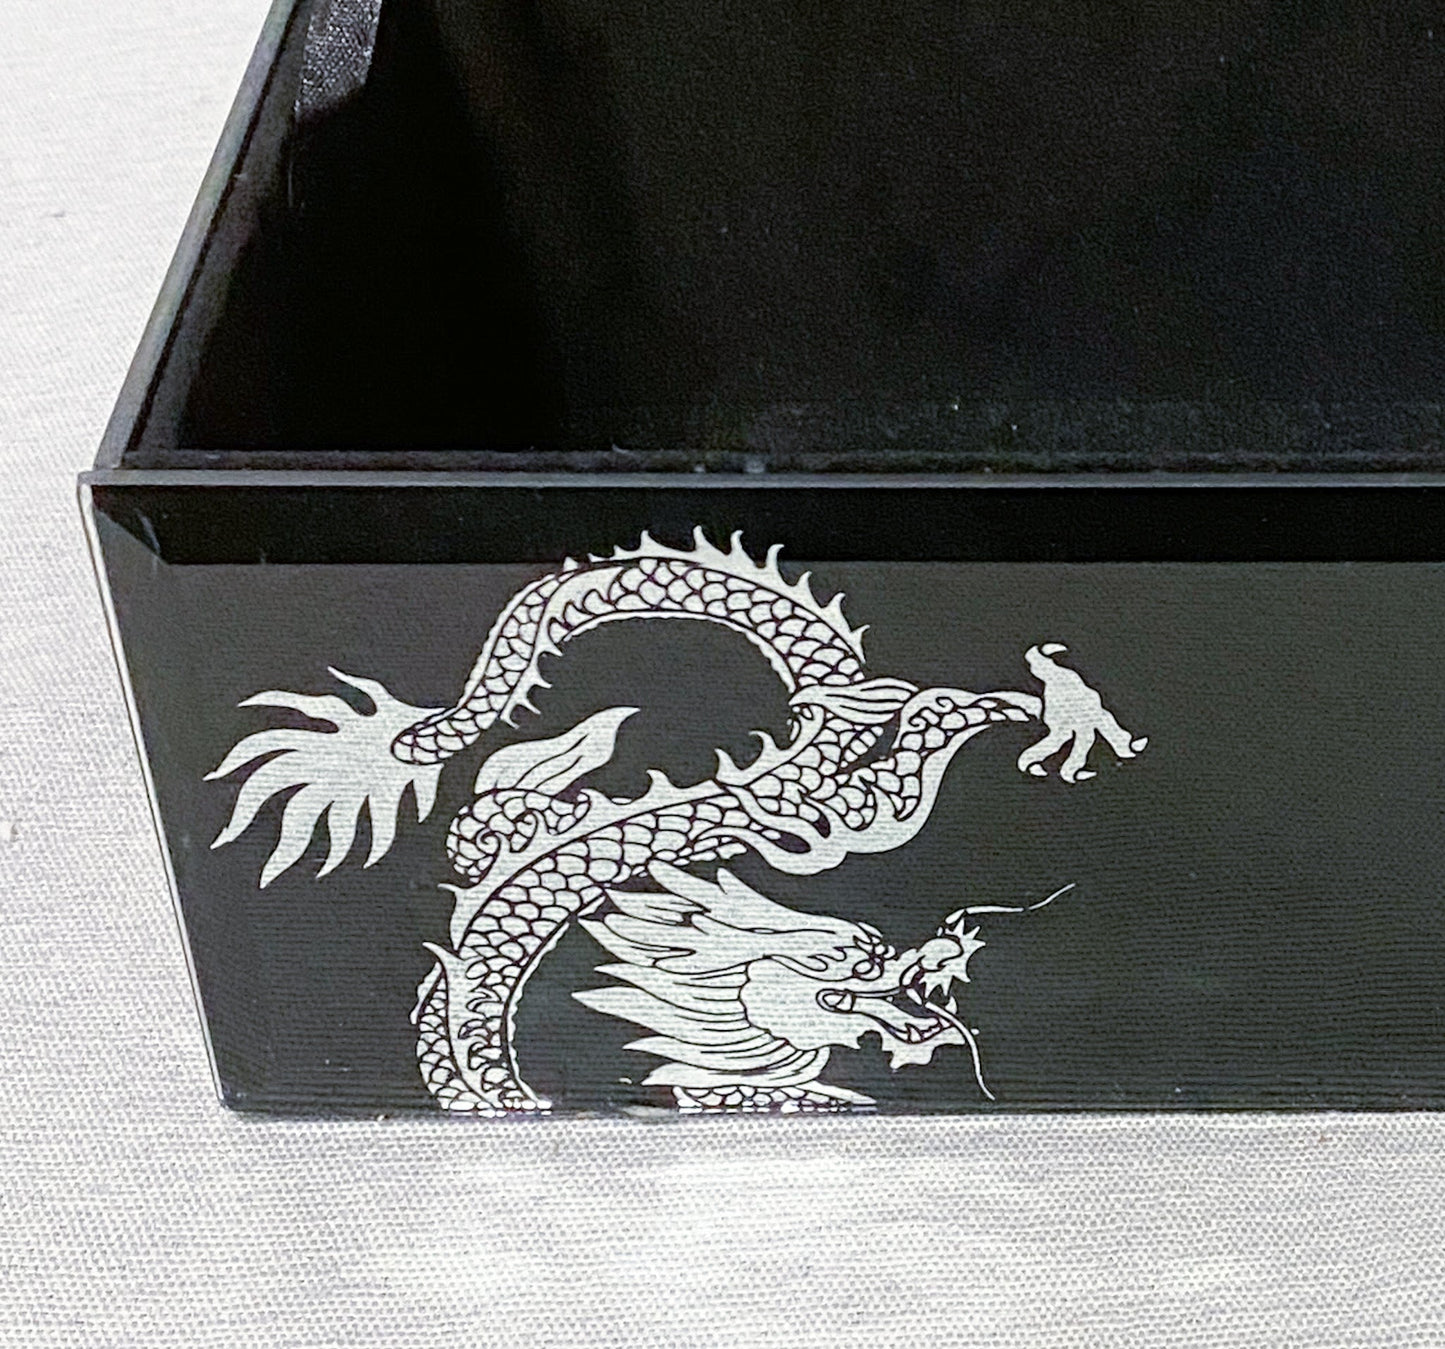 Chinese Dragon Black Glass Box and Glass Coaster Set